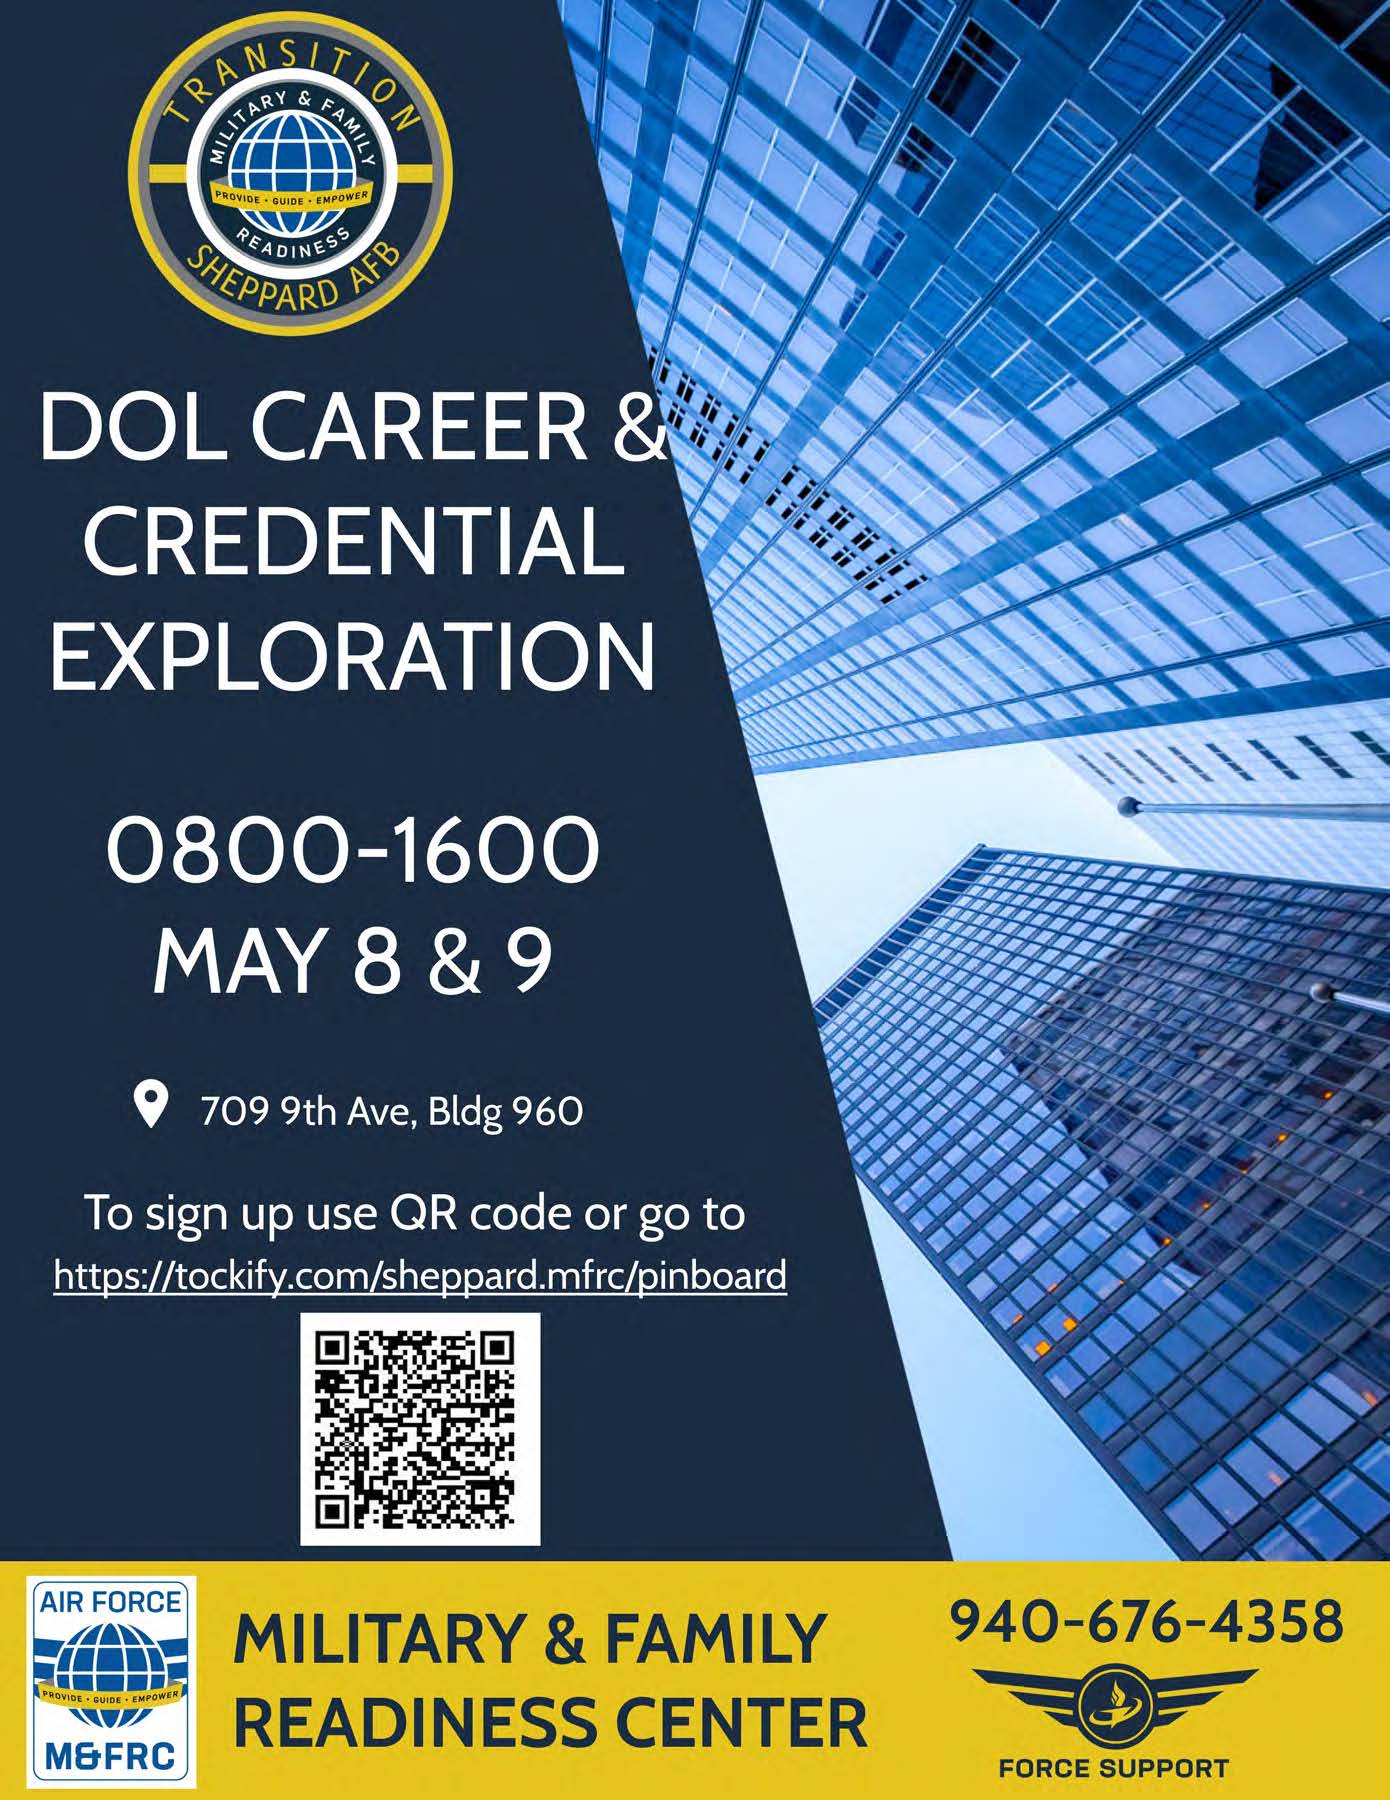 DOL Career & Credential Exploration